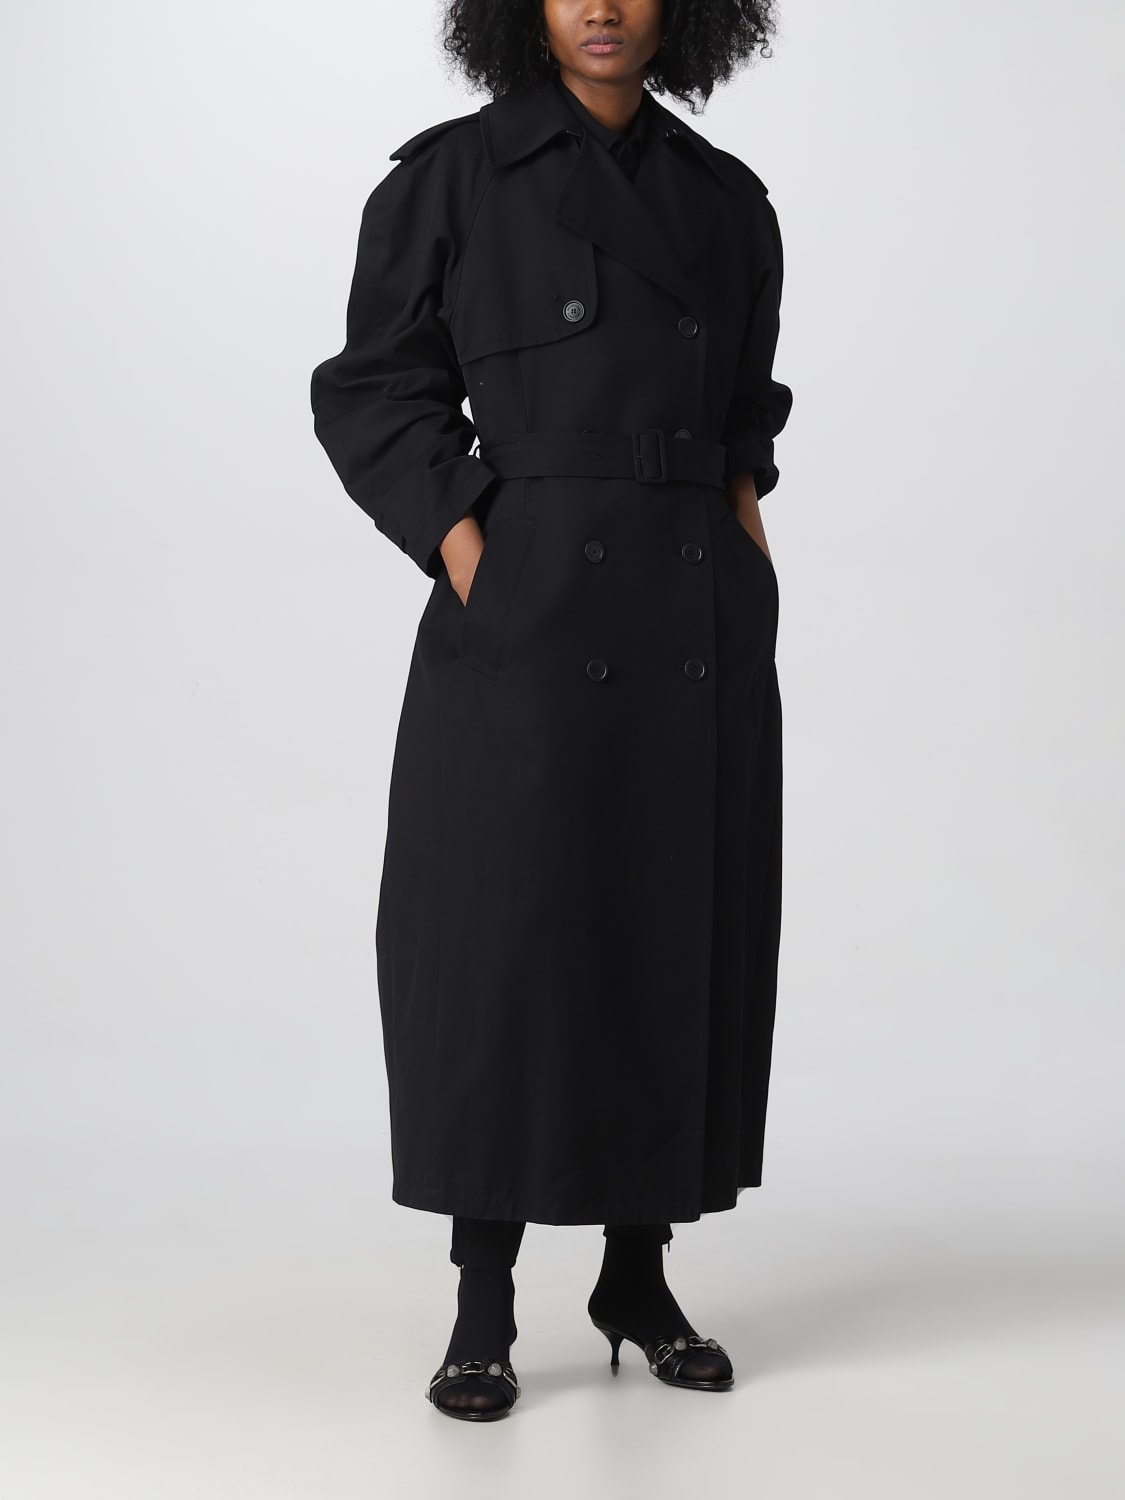 Muldyr tapet slump BALENCIAGA: trench coat in wool blend - Black | Balenciaga trench coat  725342TNP09 online at GIGLIO.COM